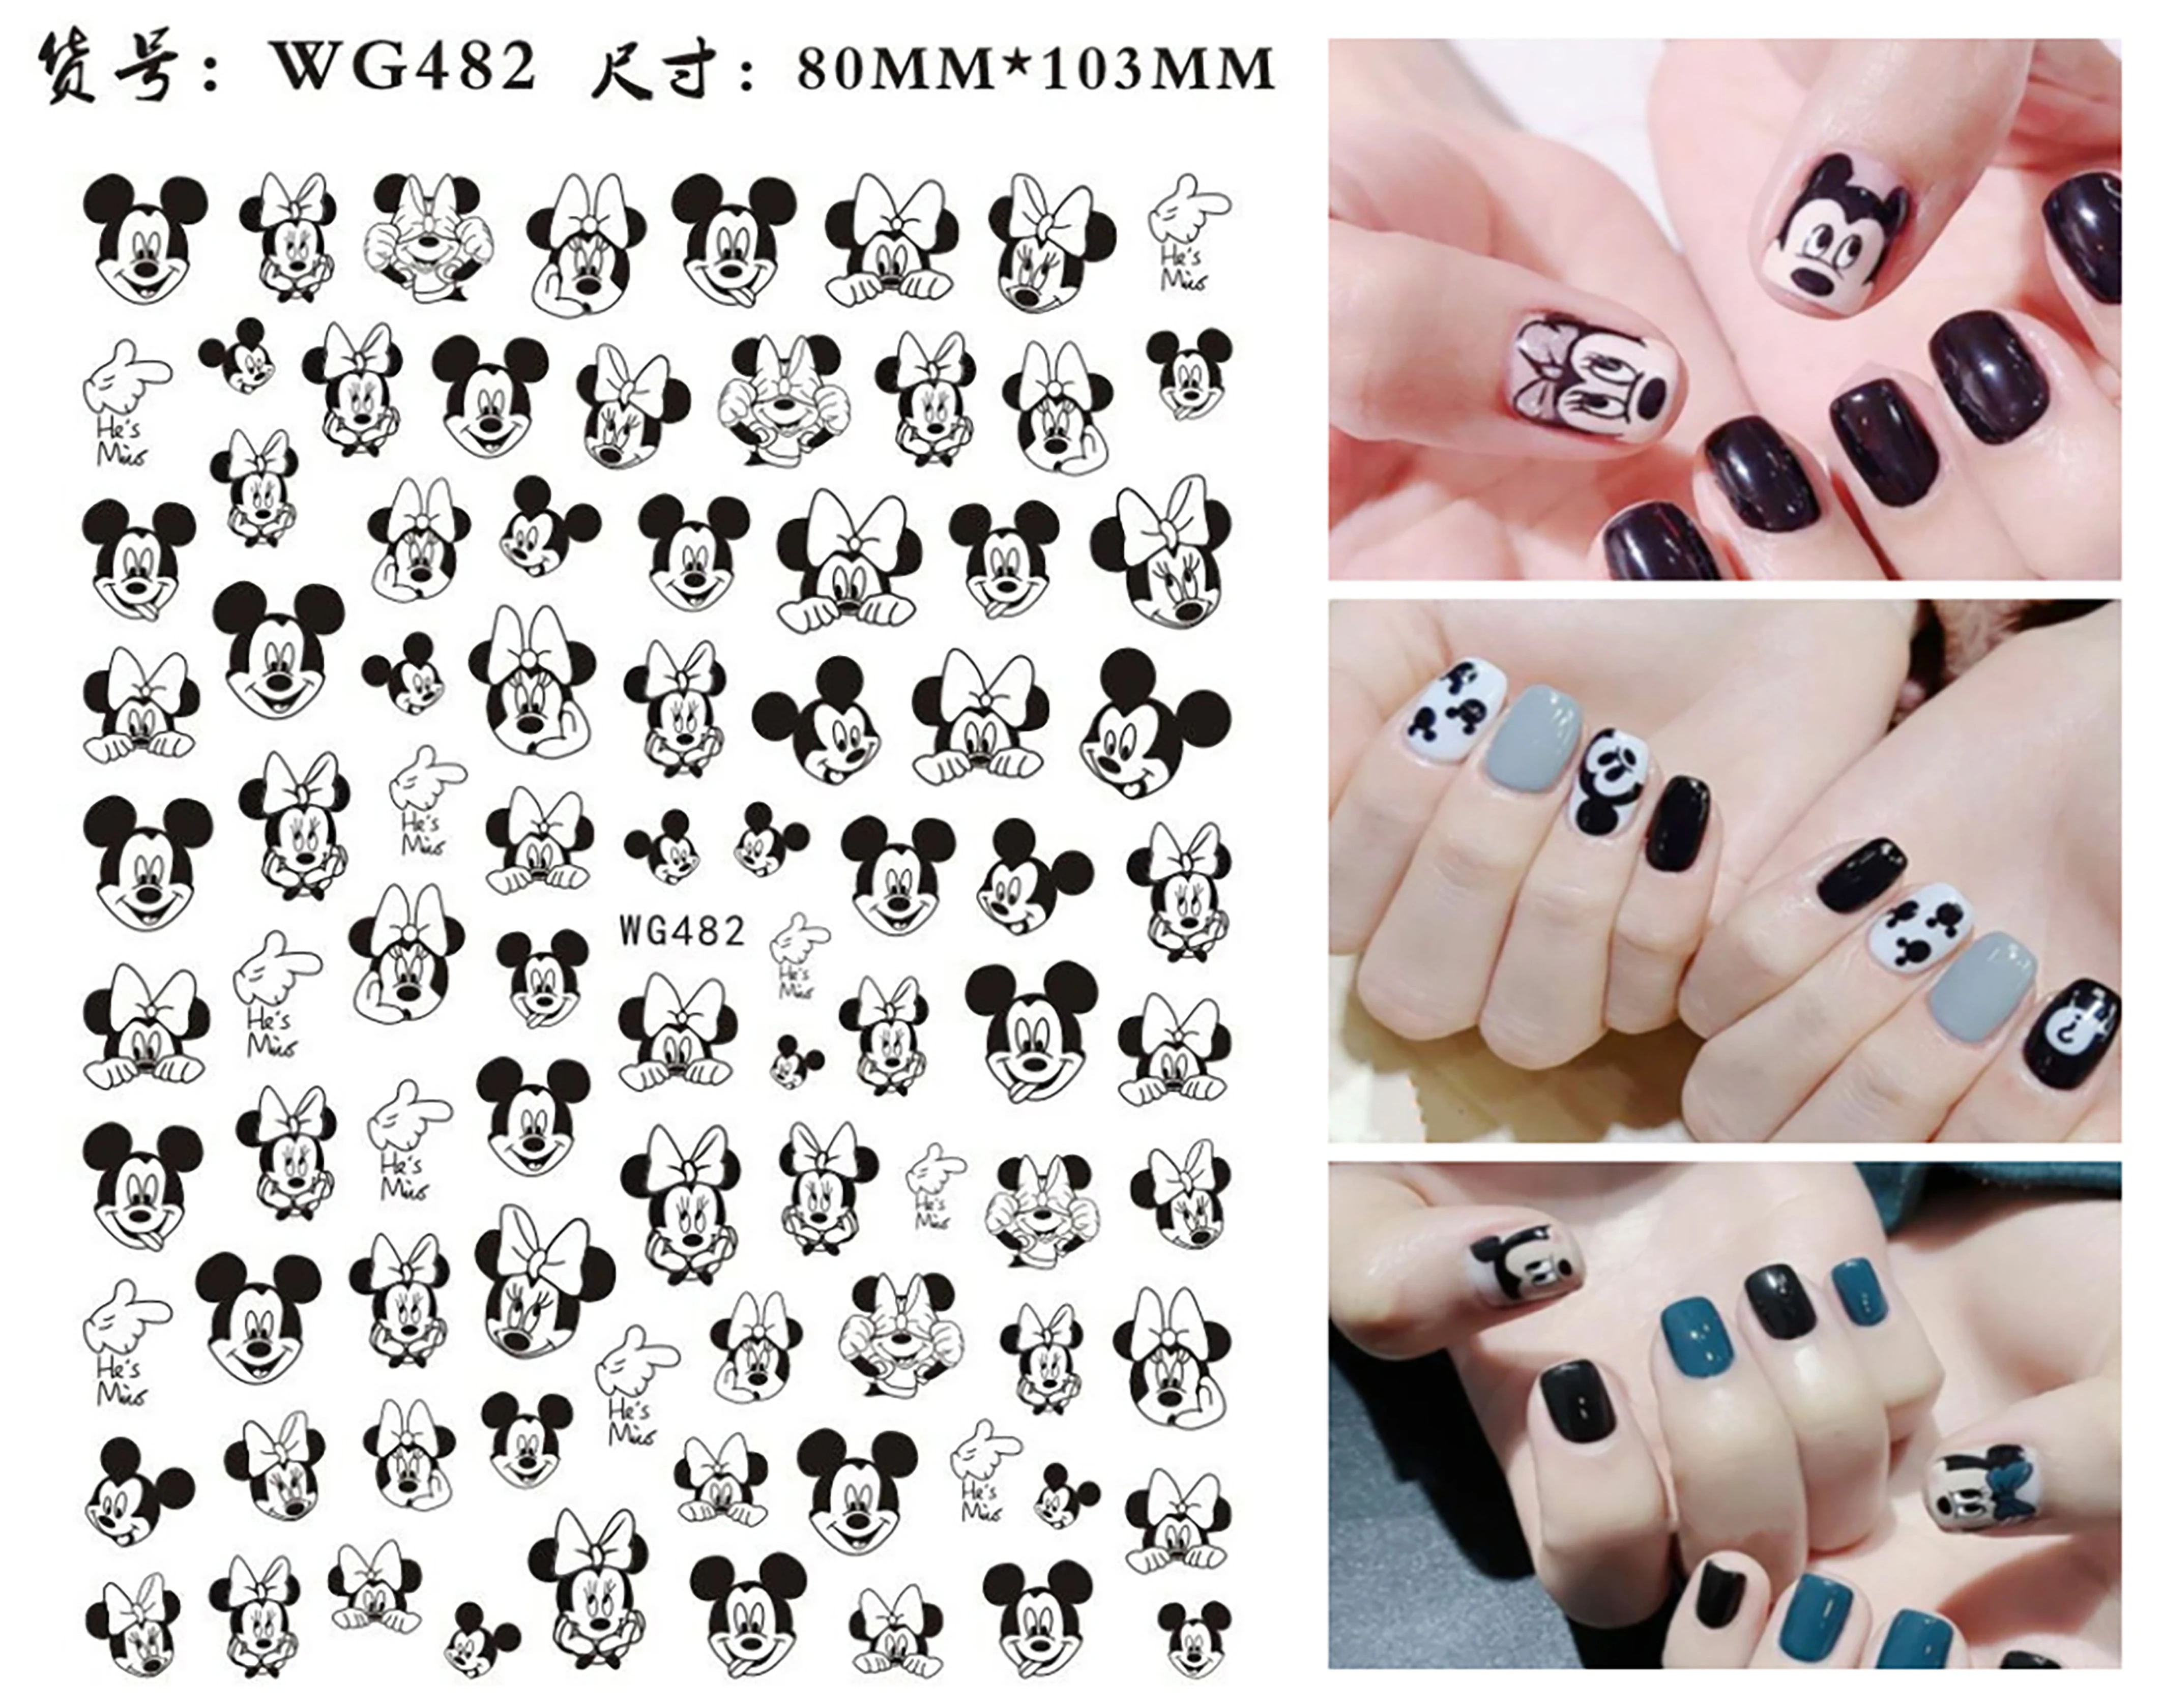 Disney Nail Art Decals Disney Princess Mickey Mouse Stickers Nail Art  Stickers Handmade DIY Nail Art